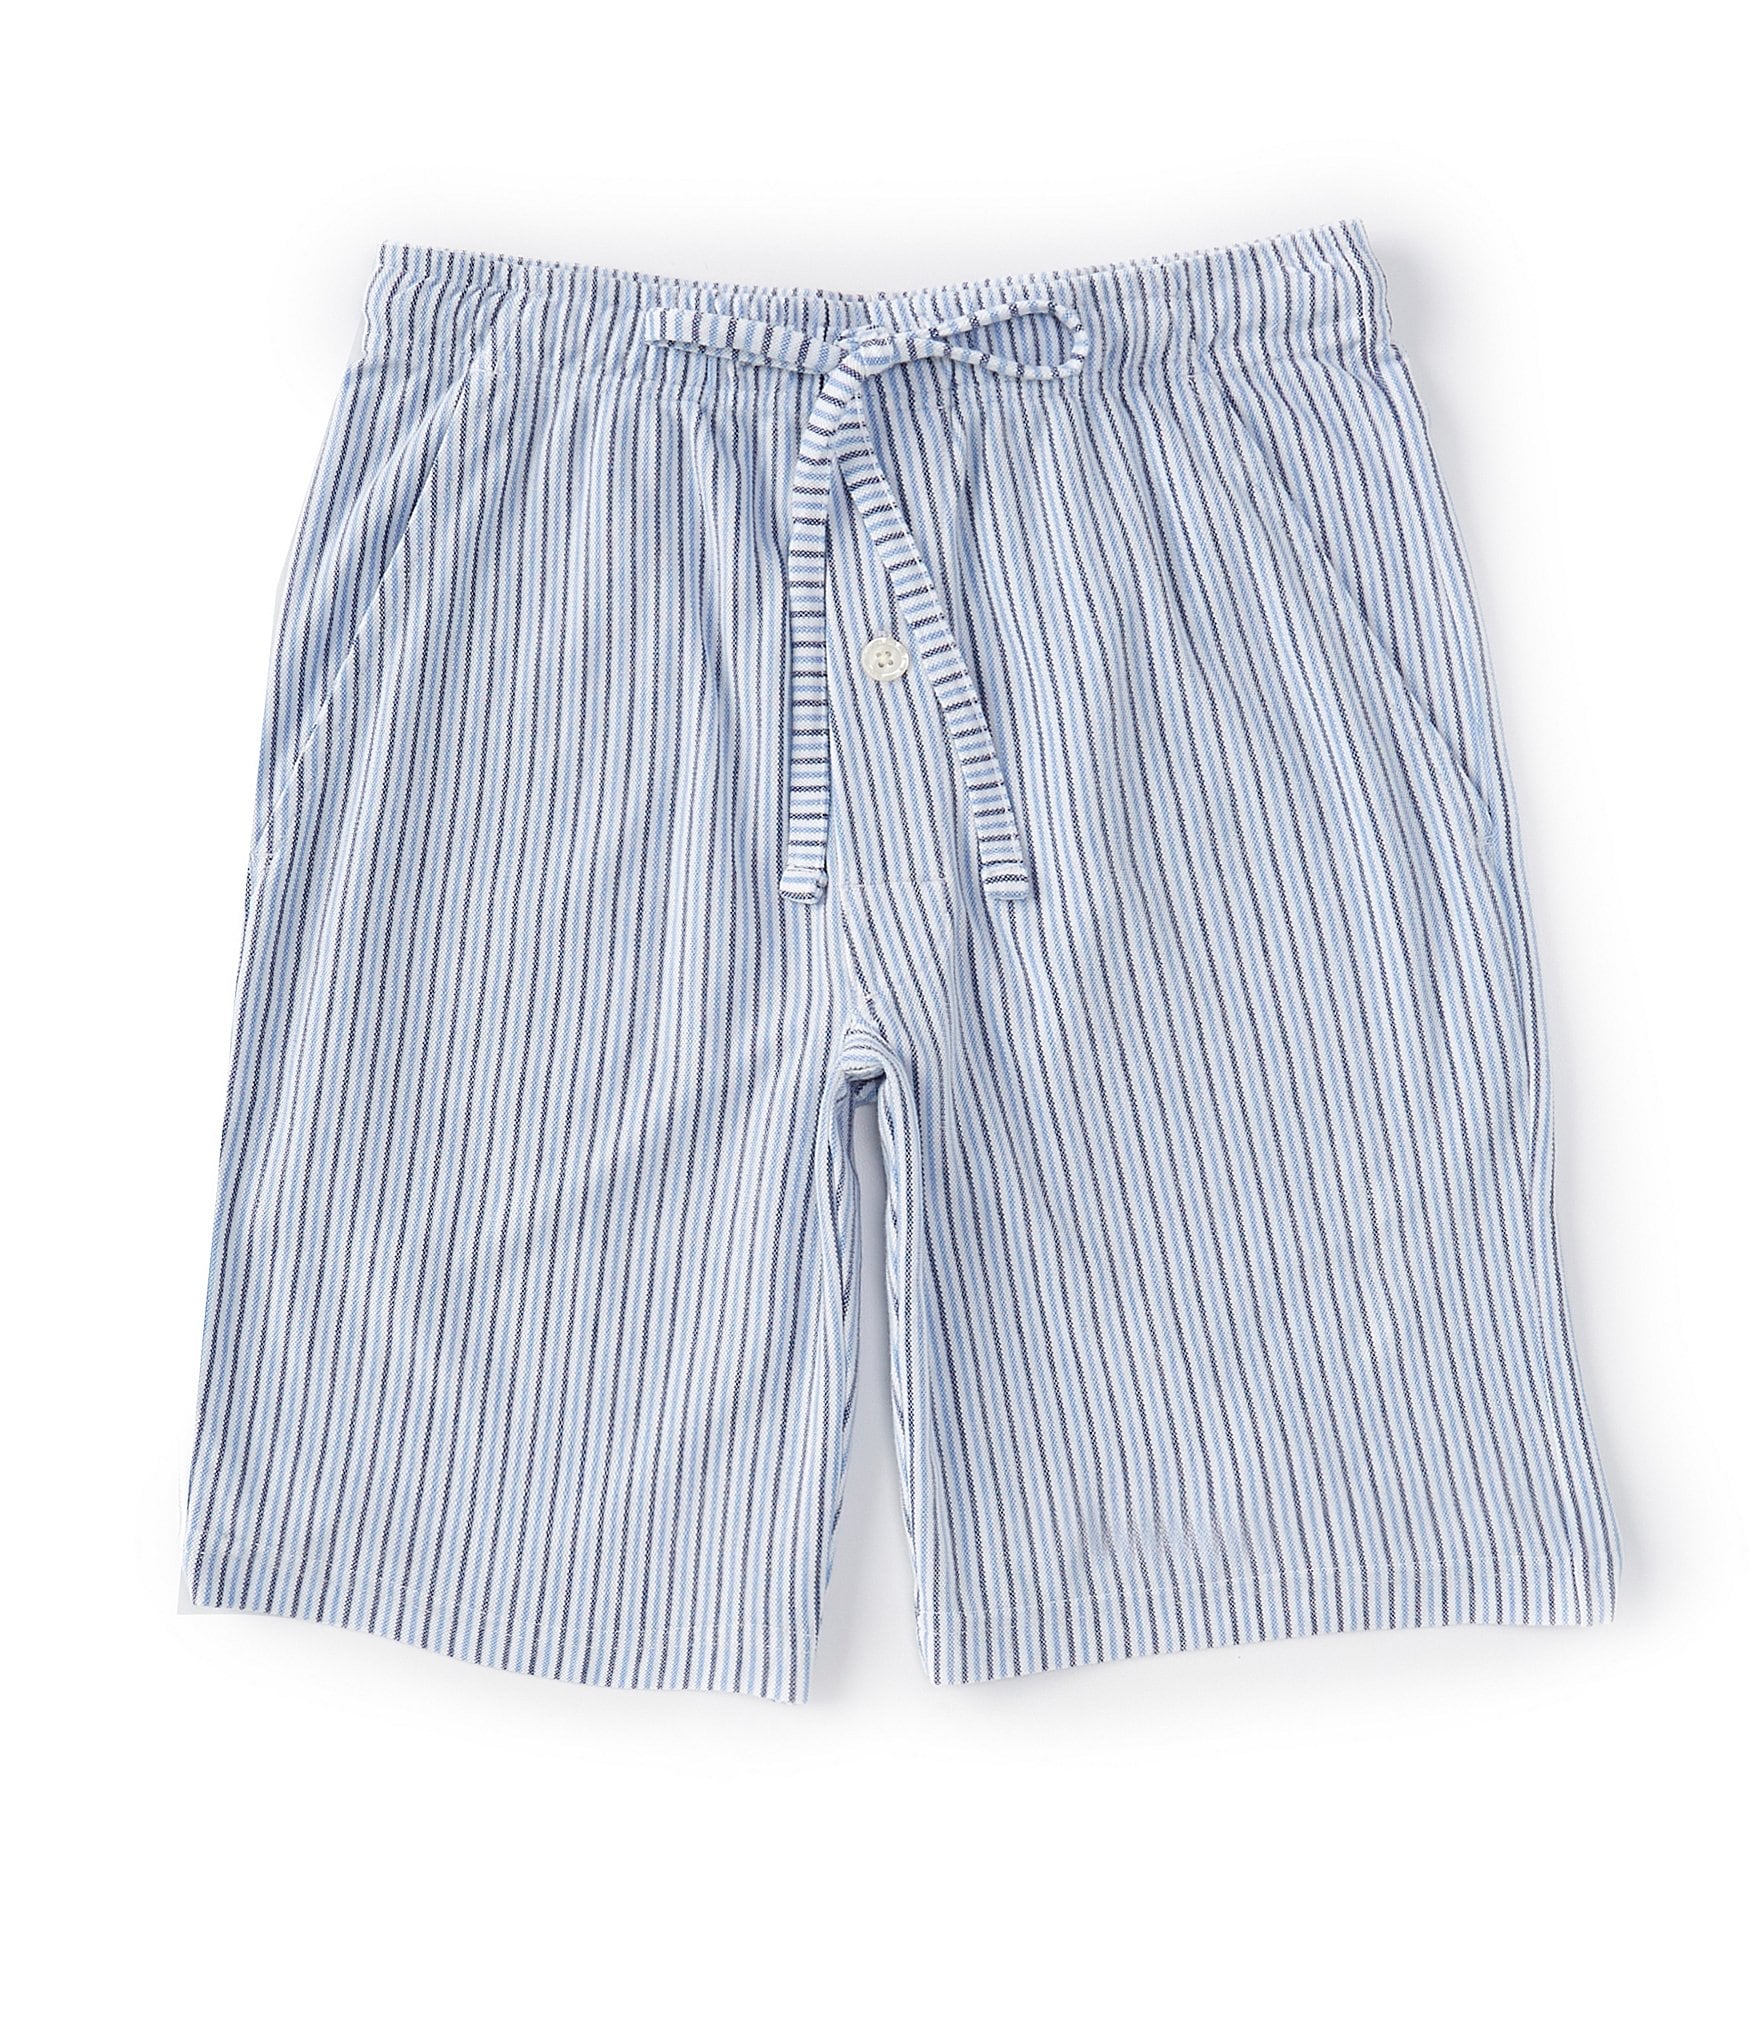 Roundtree & Yorke Solid Knit Jam Shorts | Dillard's